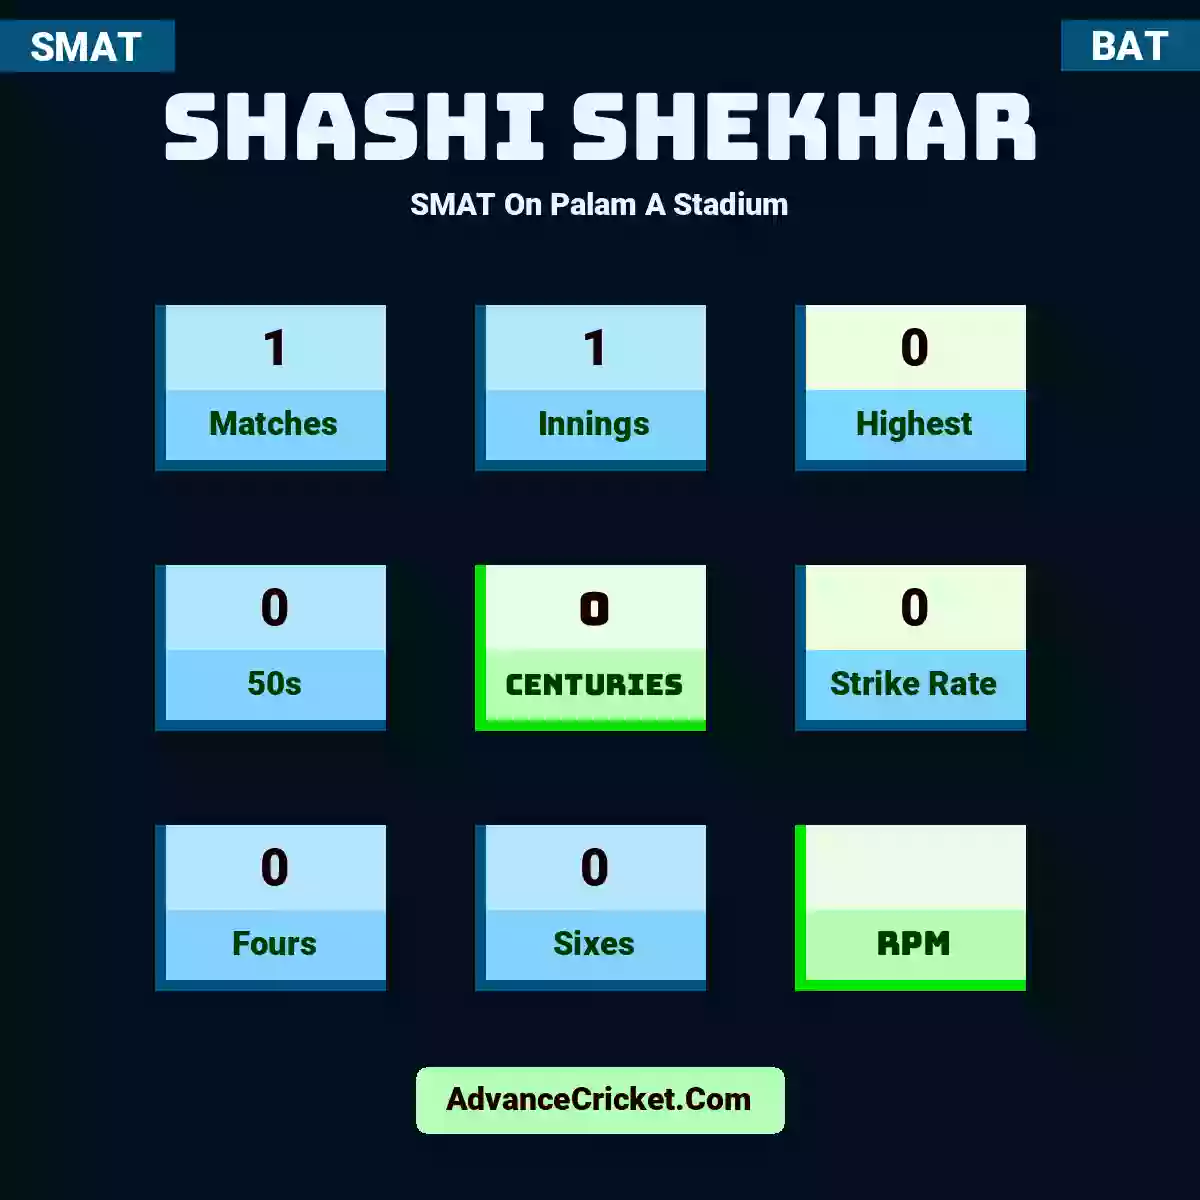 Shashi Shekhar SMAT  On Palam A Stadium, Shashi Shekhar played 1 matches, scored 0 runs as highest, 0 half-centuries, and 0 centuries, with a strike rate of 0. S.Shekhar hit 0 fours and 0 sixes.